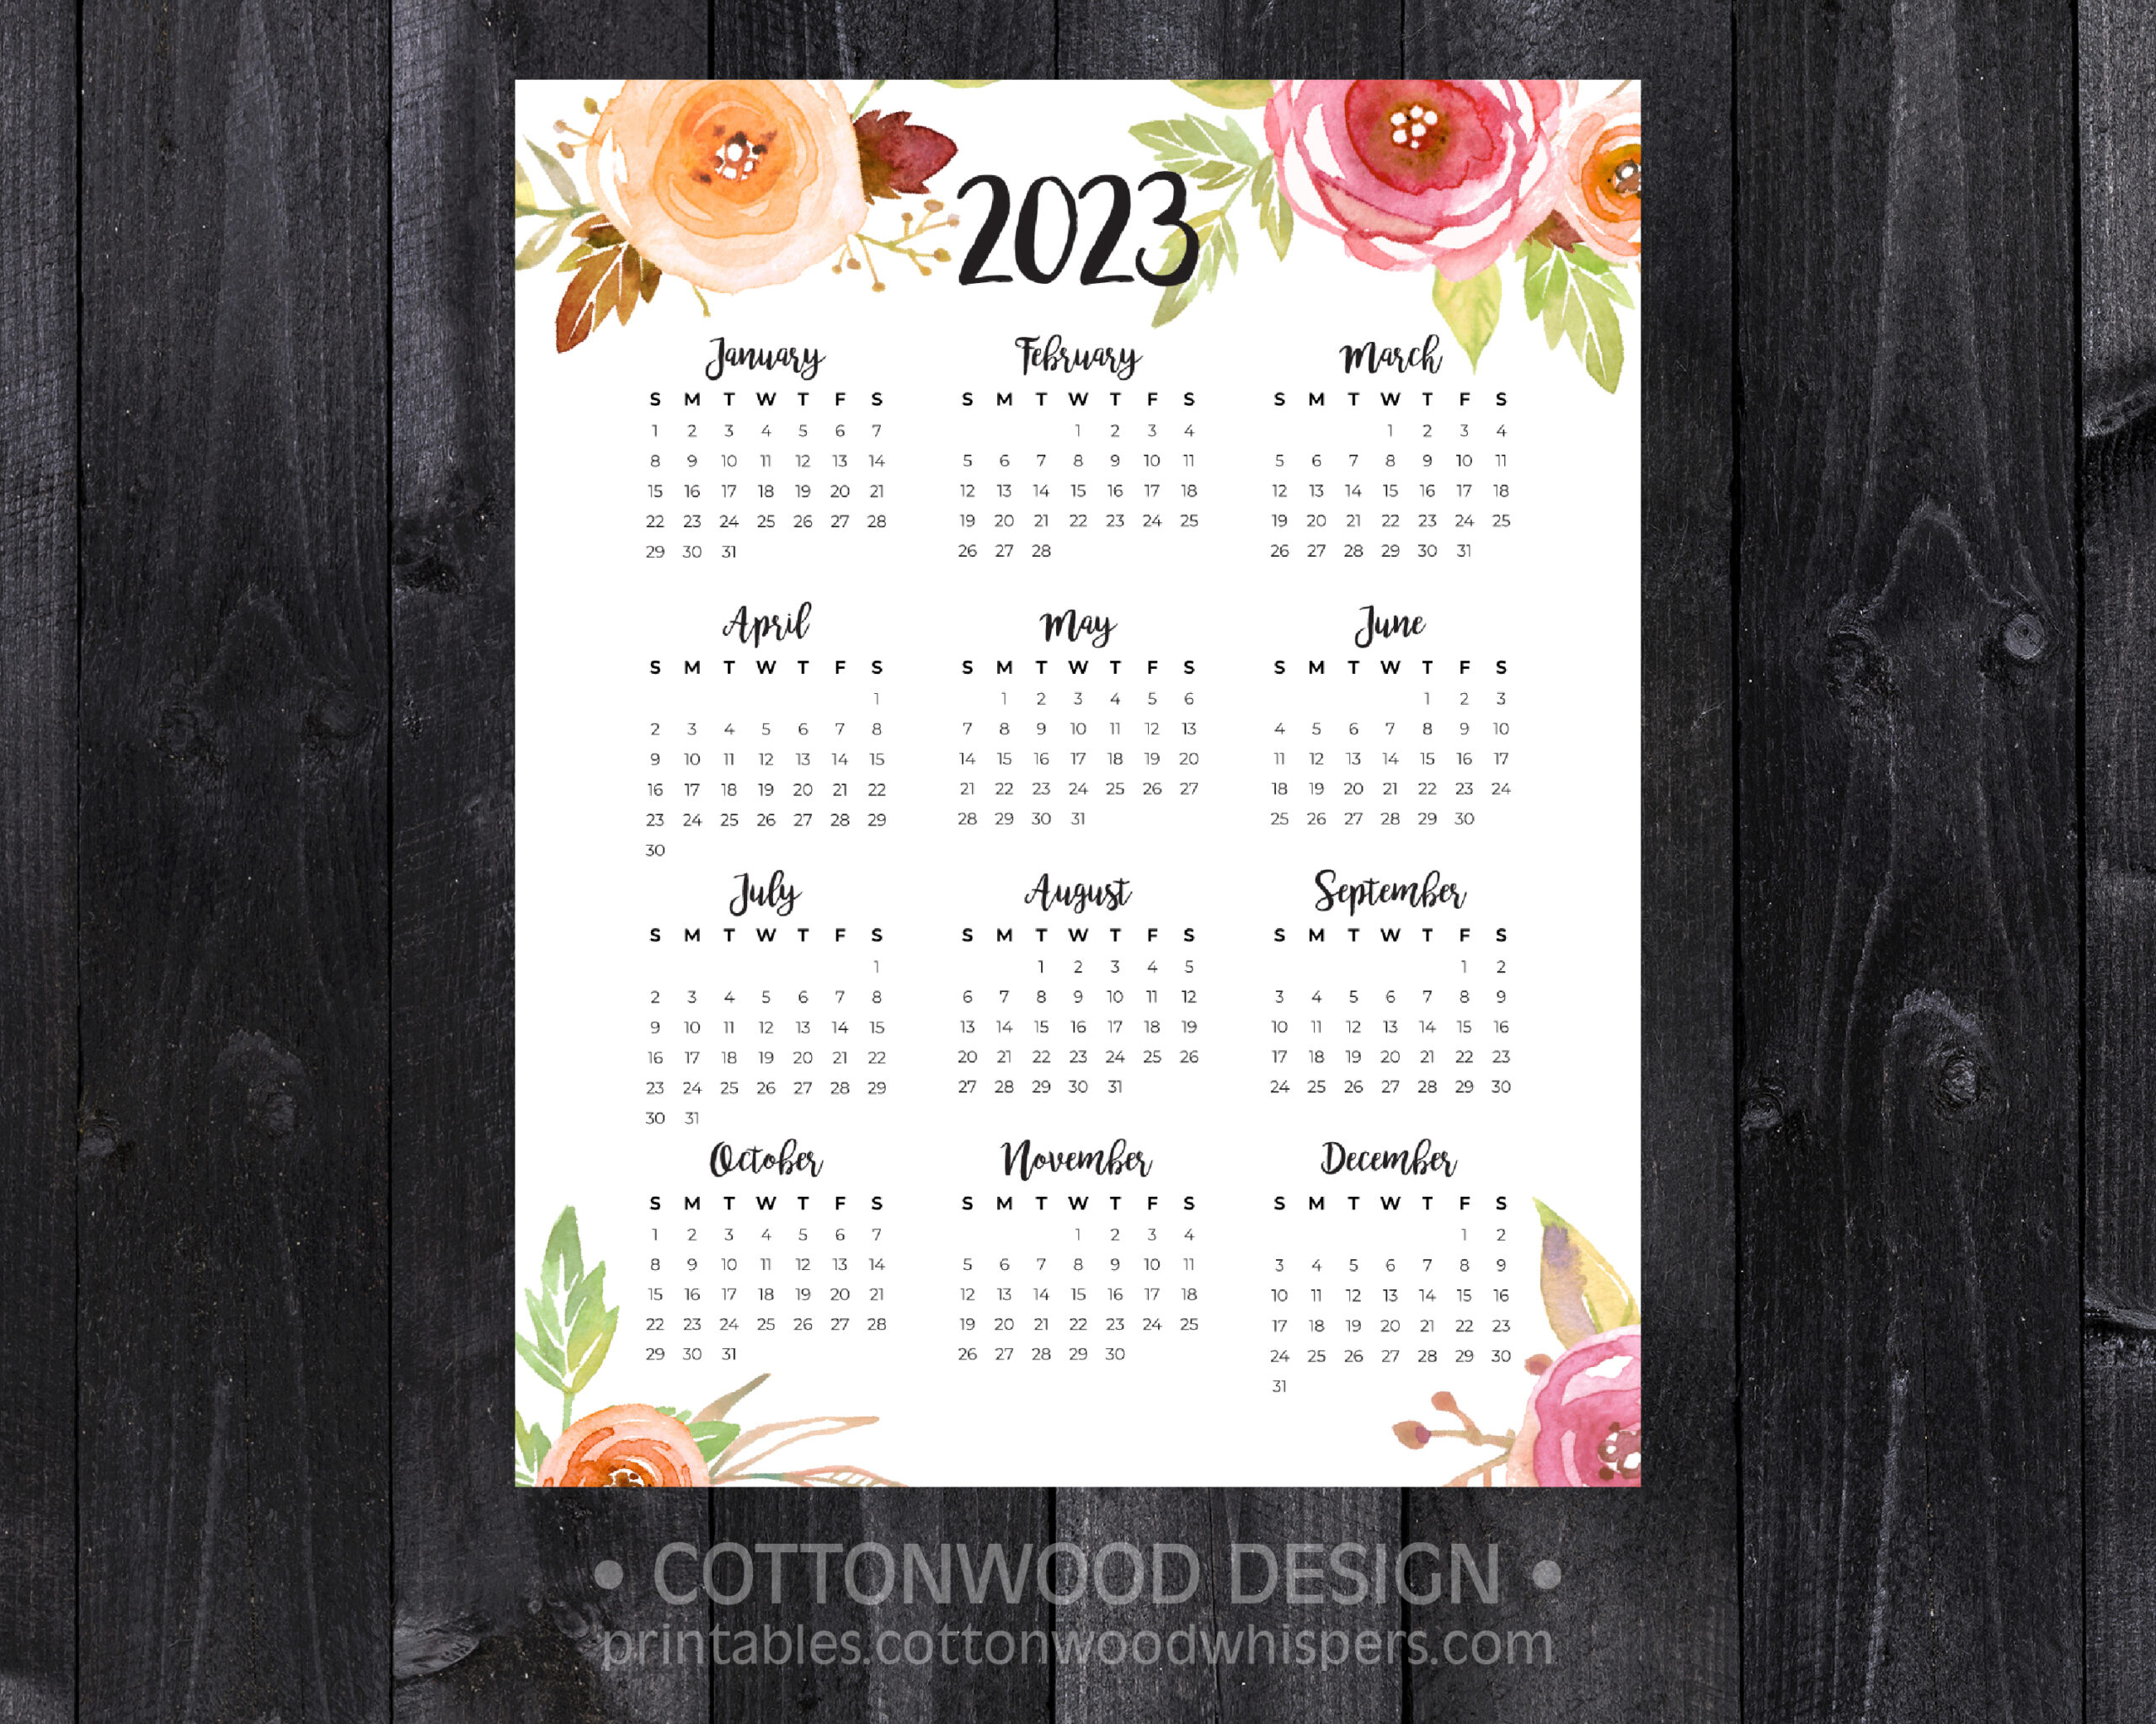 year-2023-calendar-templates-123calendars-com-2023-calendar-templates